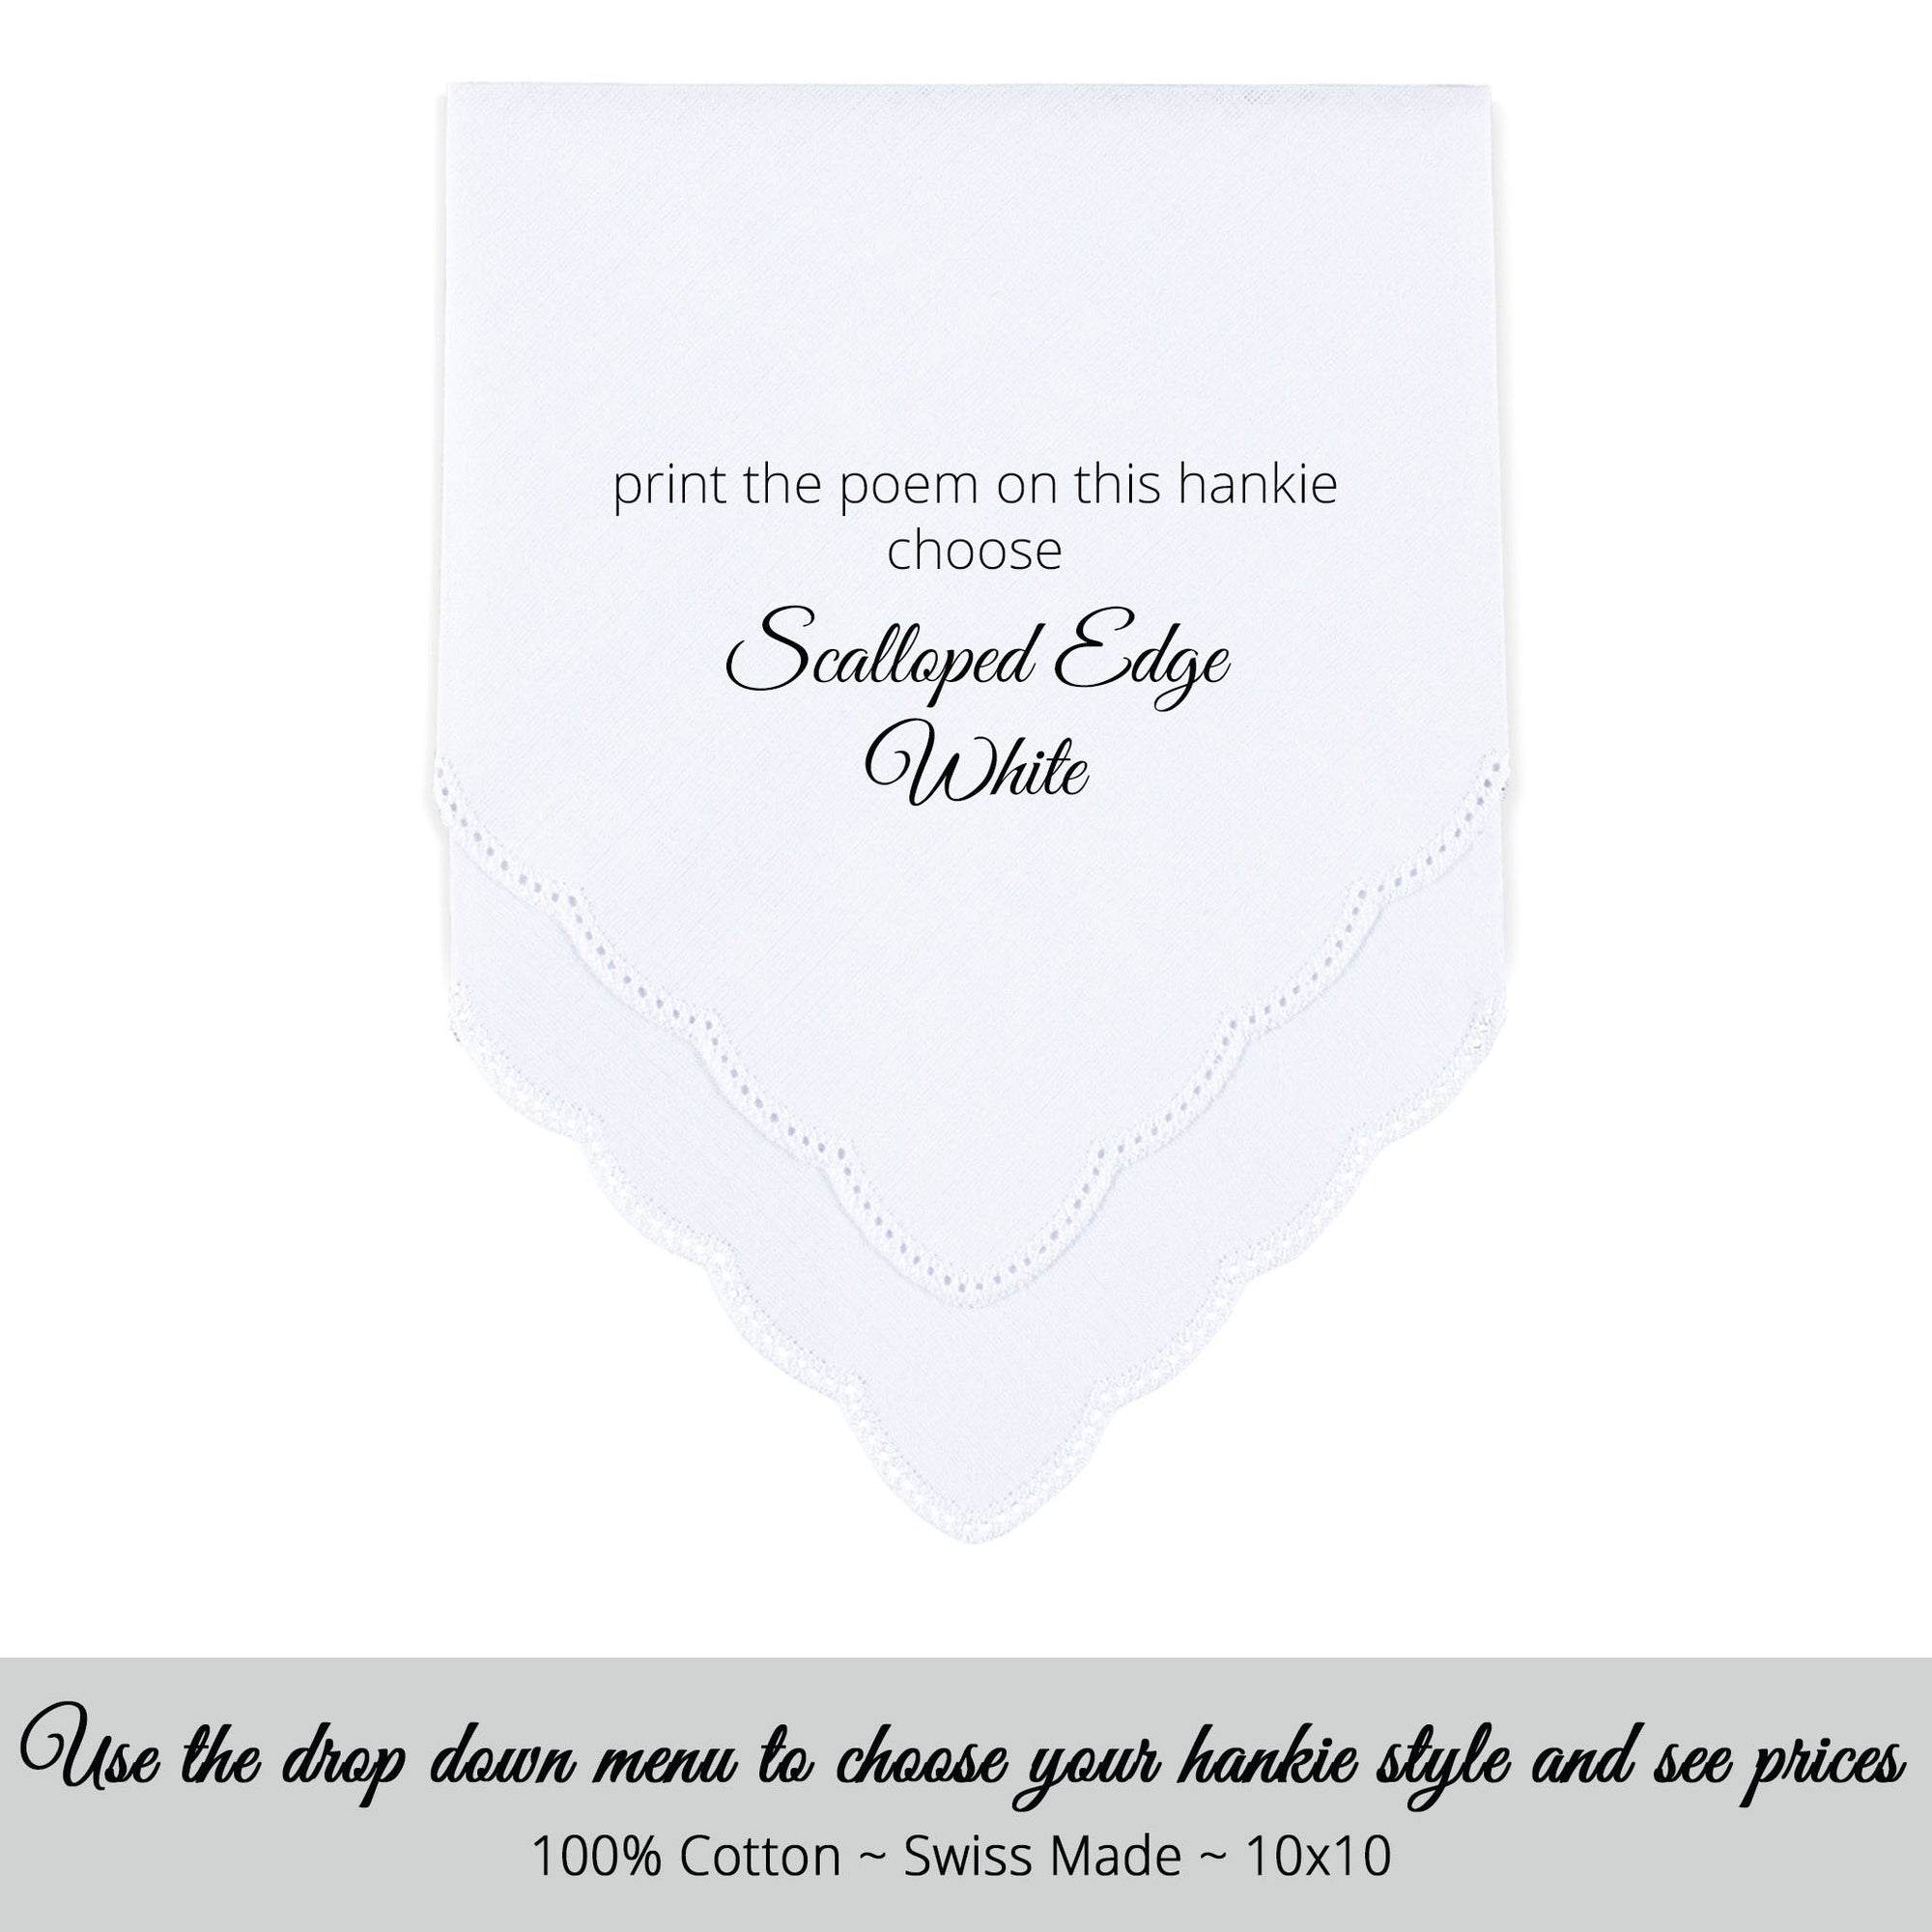 Scalloped edge white personalized wedding handkerchief poem for the bride